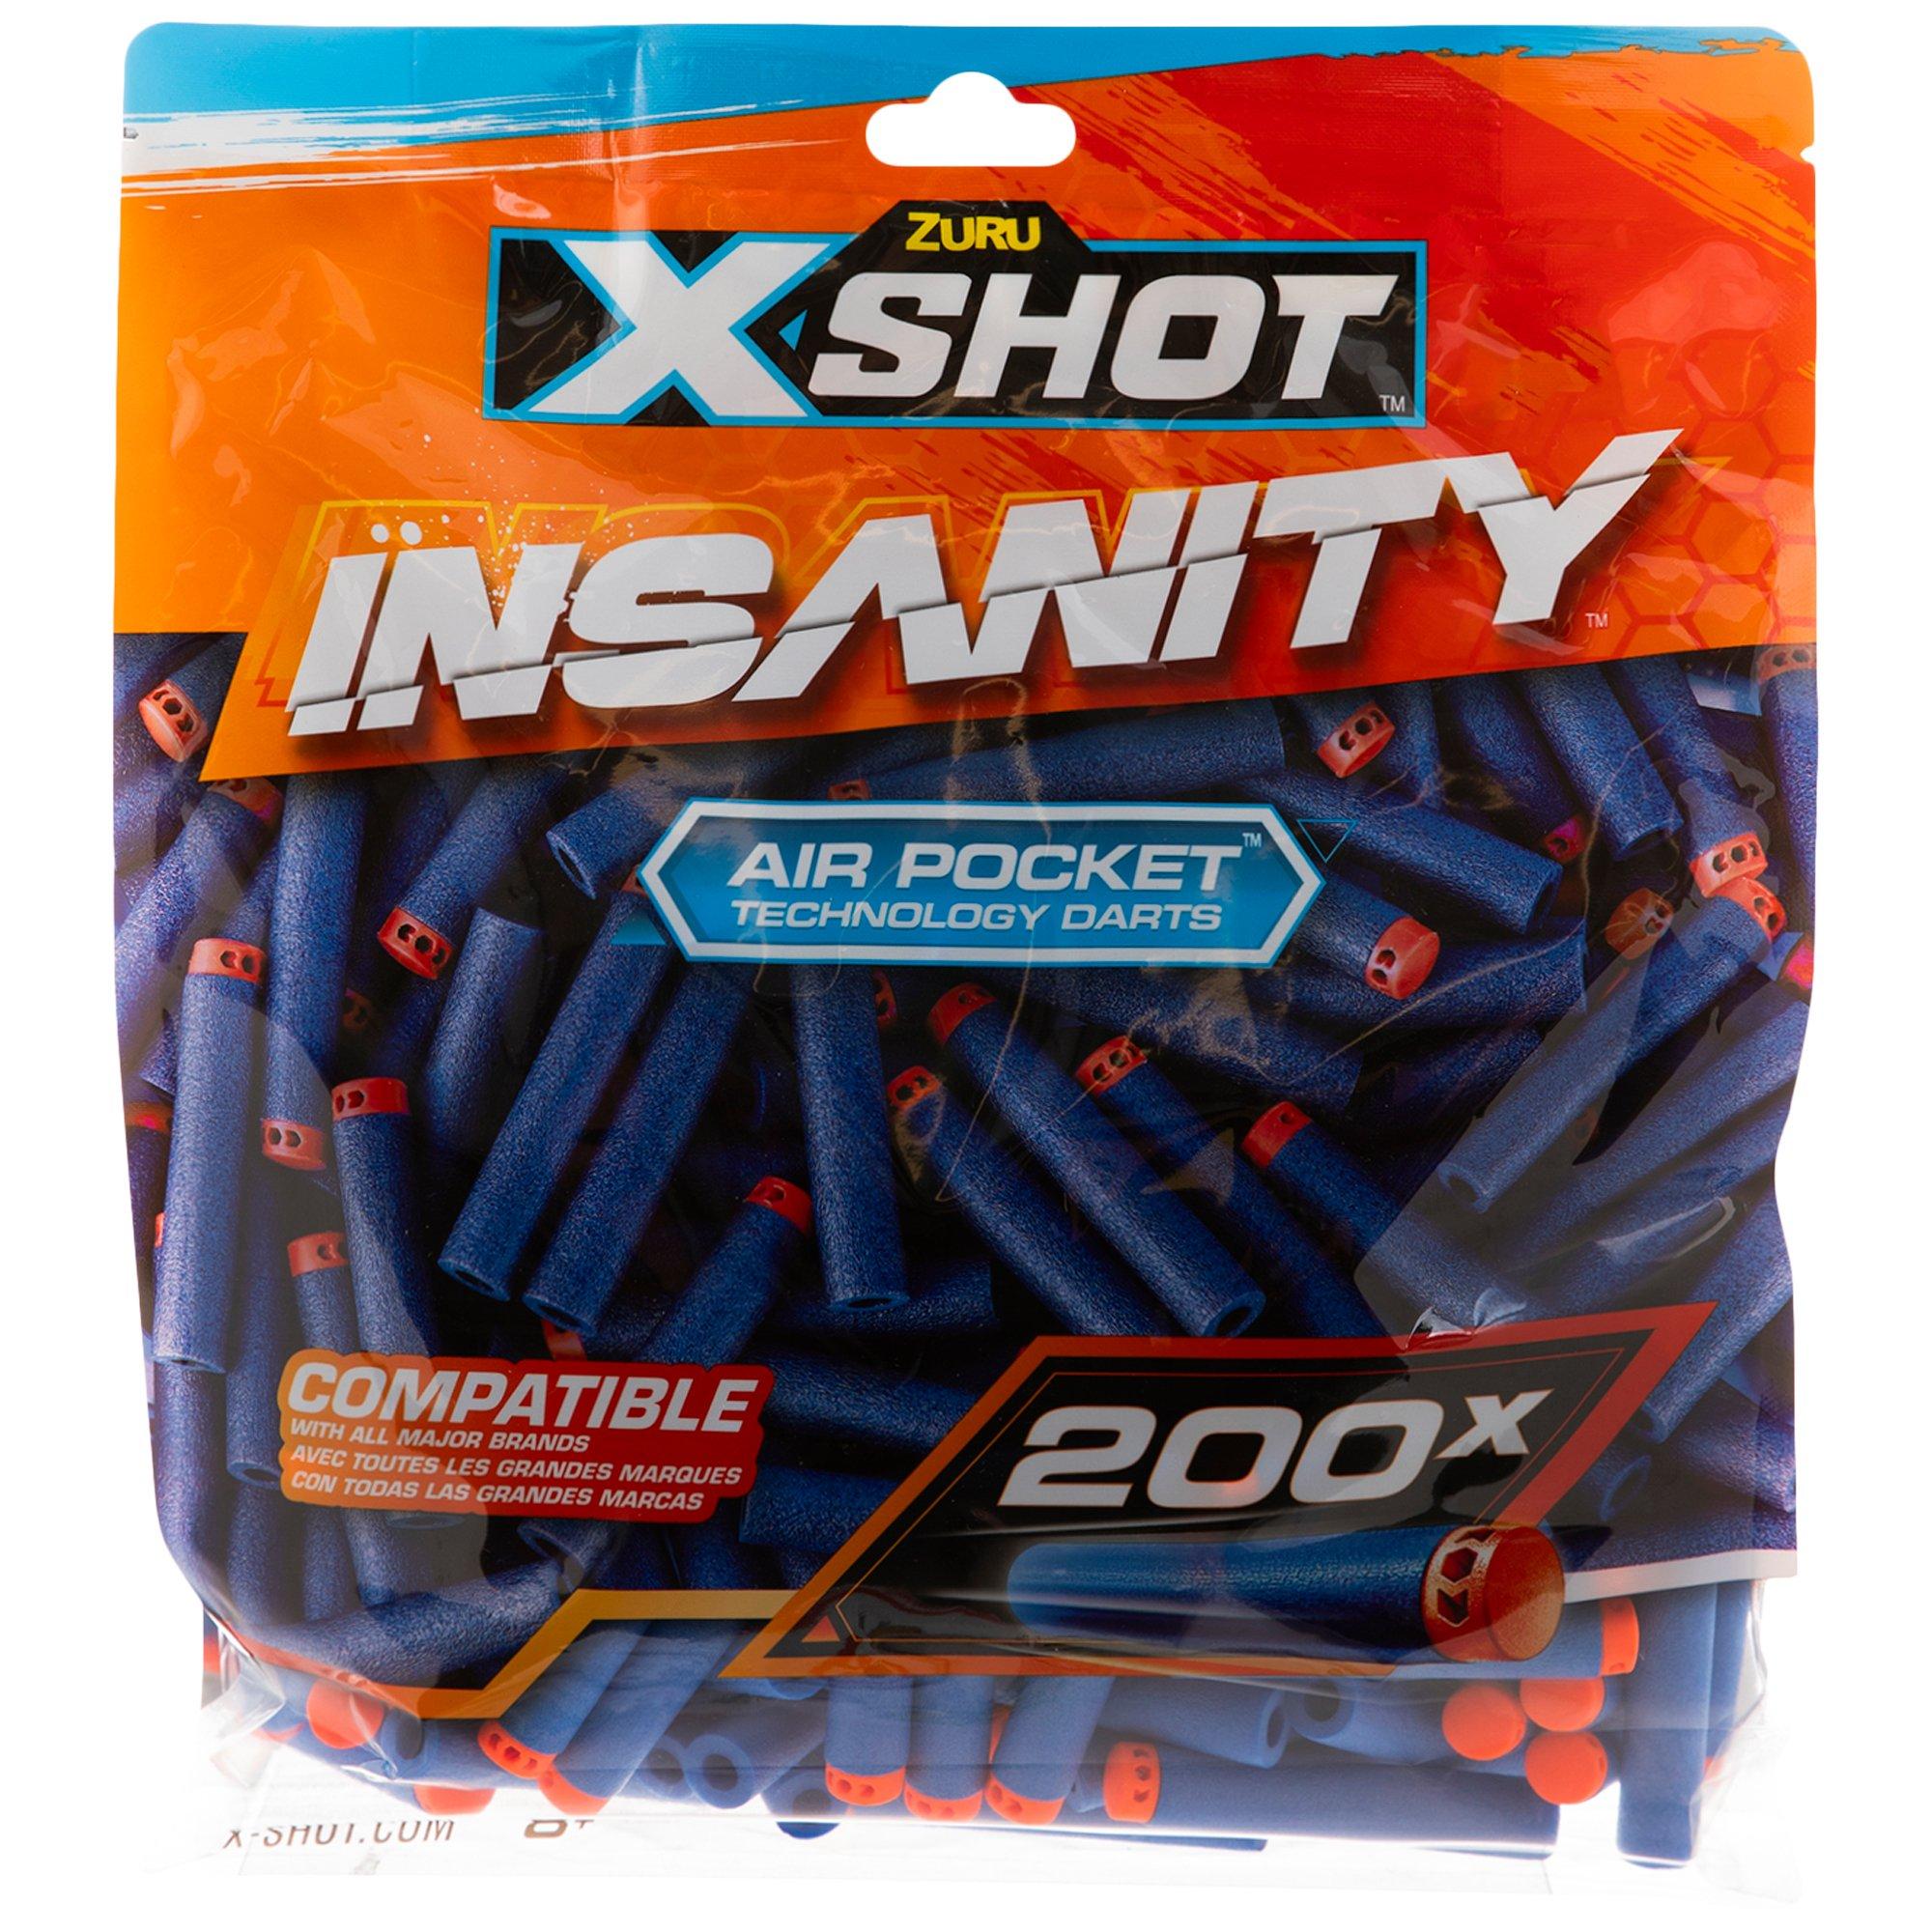 X-shot Insanity Manic (24 Fléchettes)